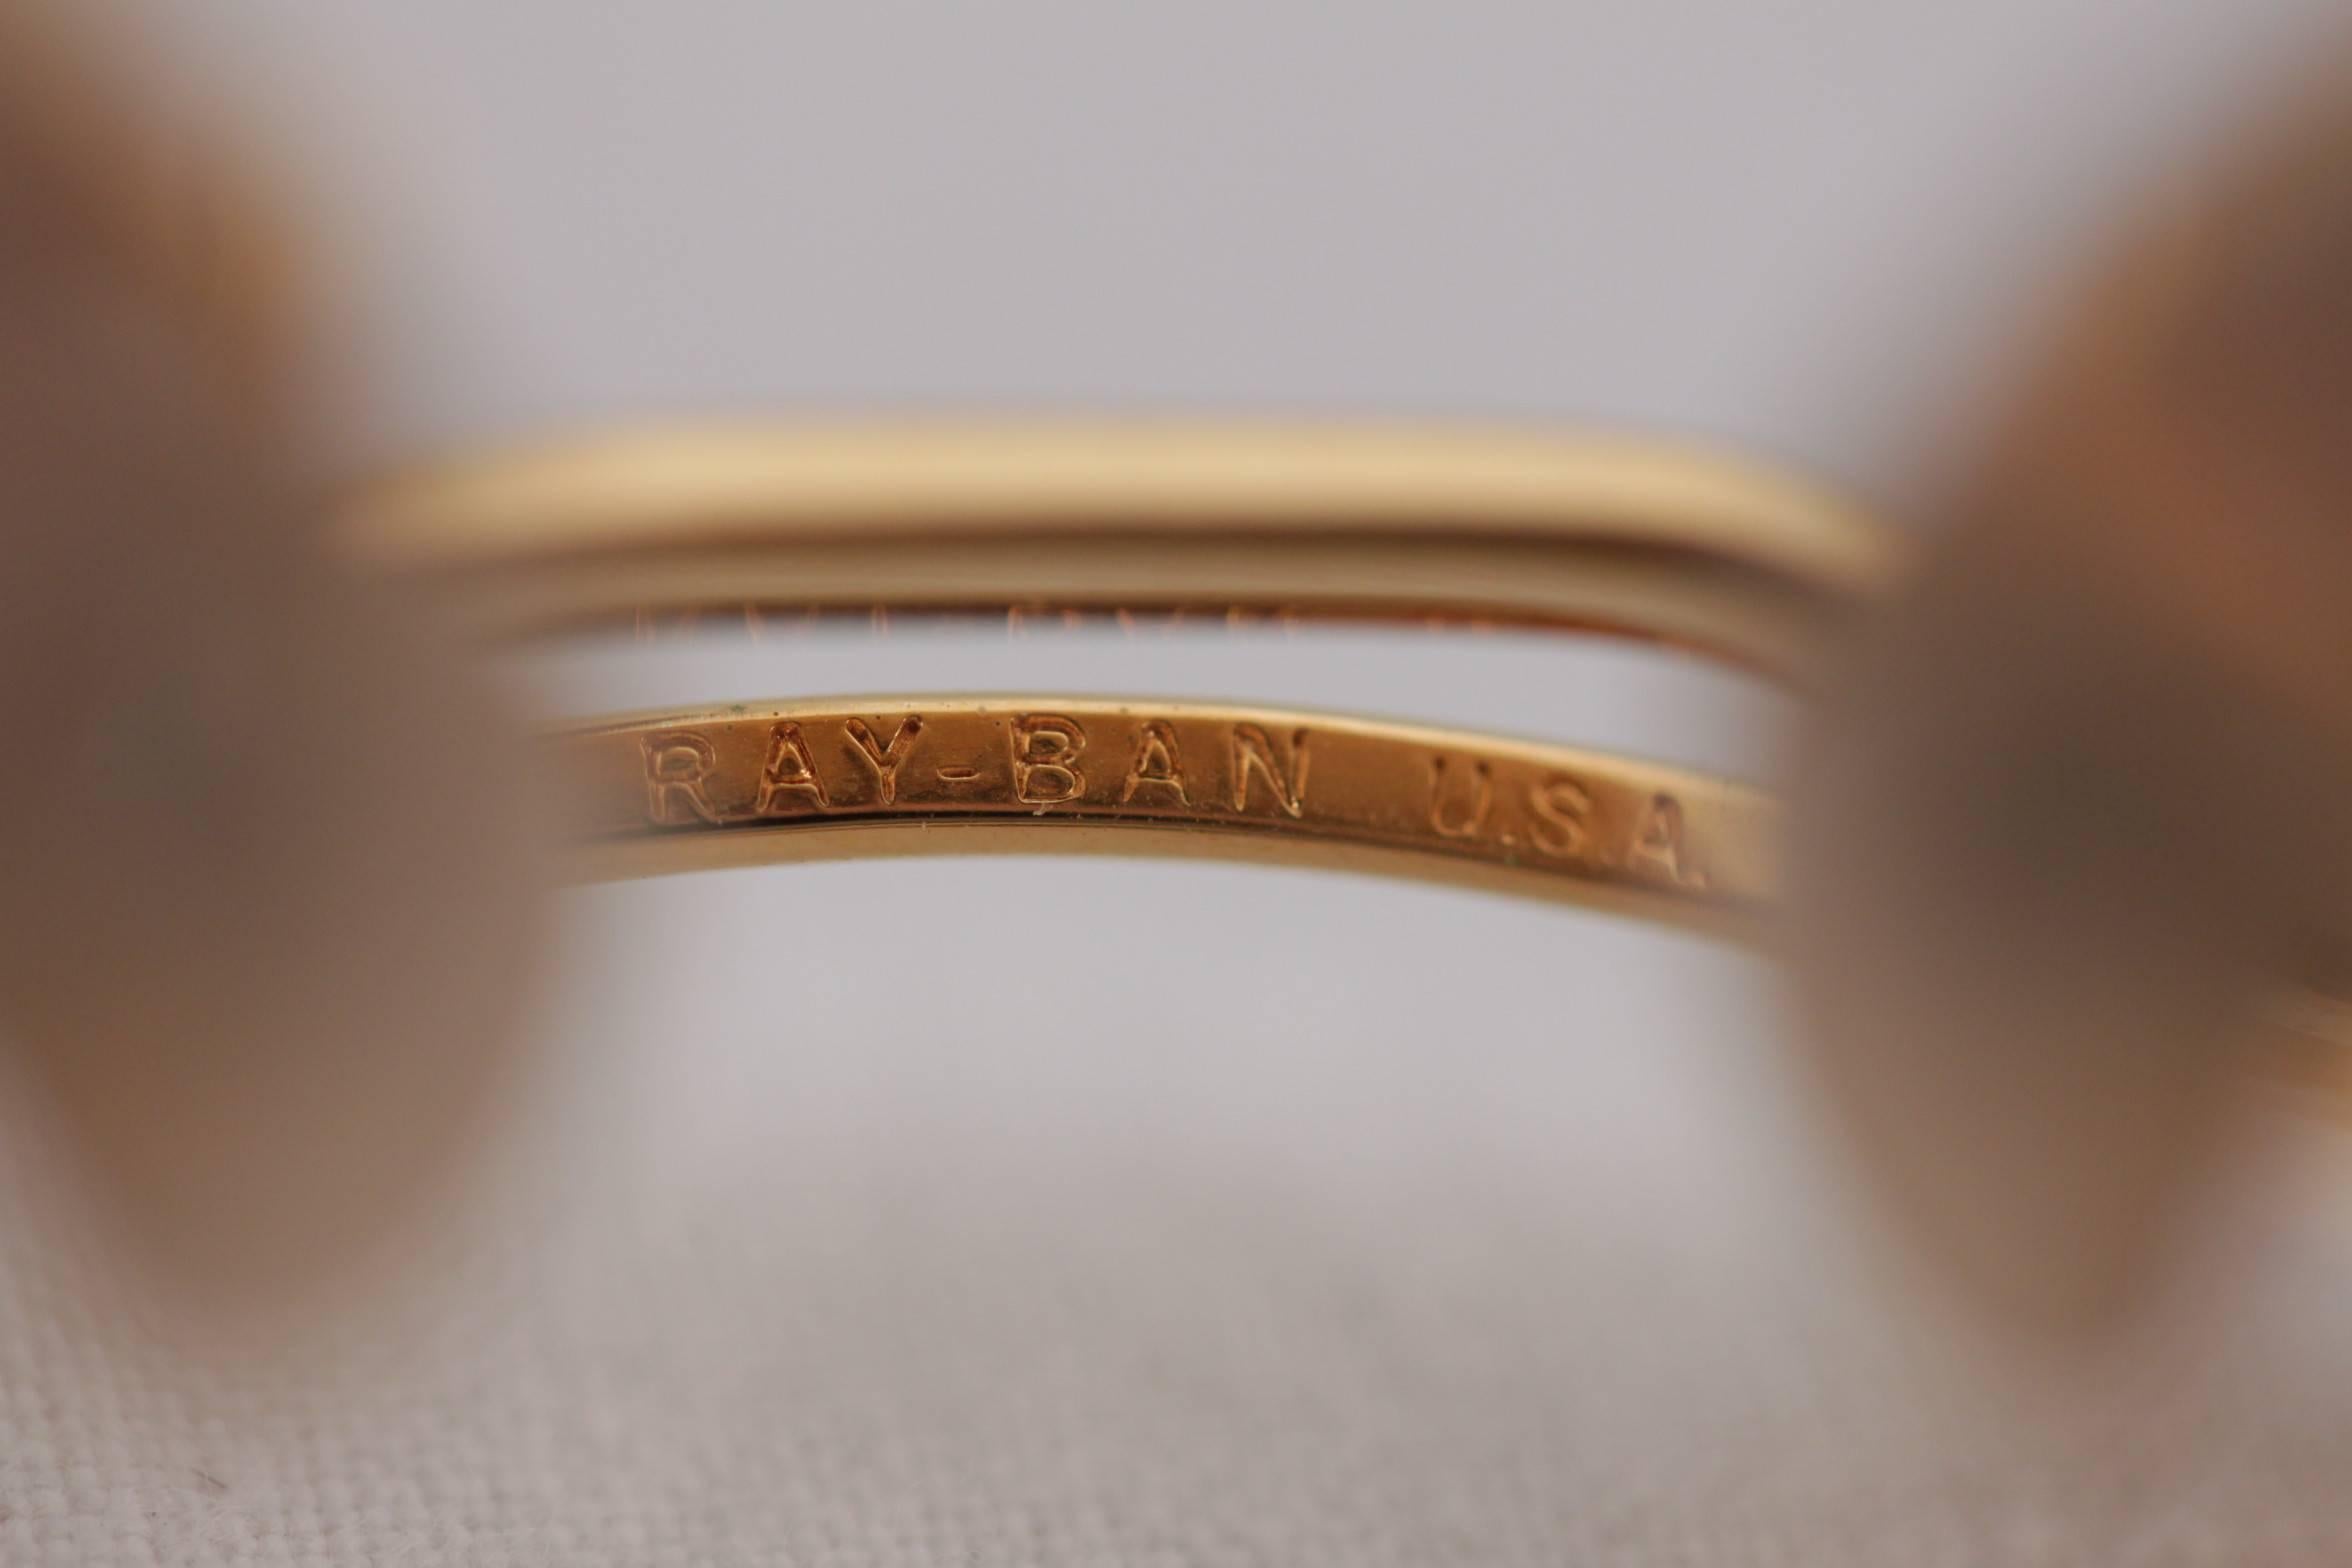 RAY BAN B&L Vintage Sunglasses SIGNET gold EYEWEAR CHROMAX lens 24K GP w/CASE 1